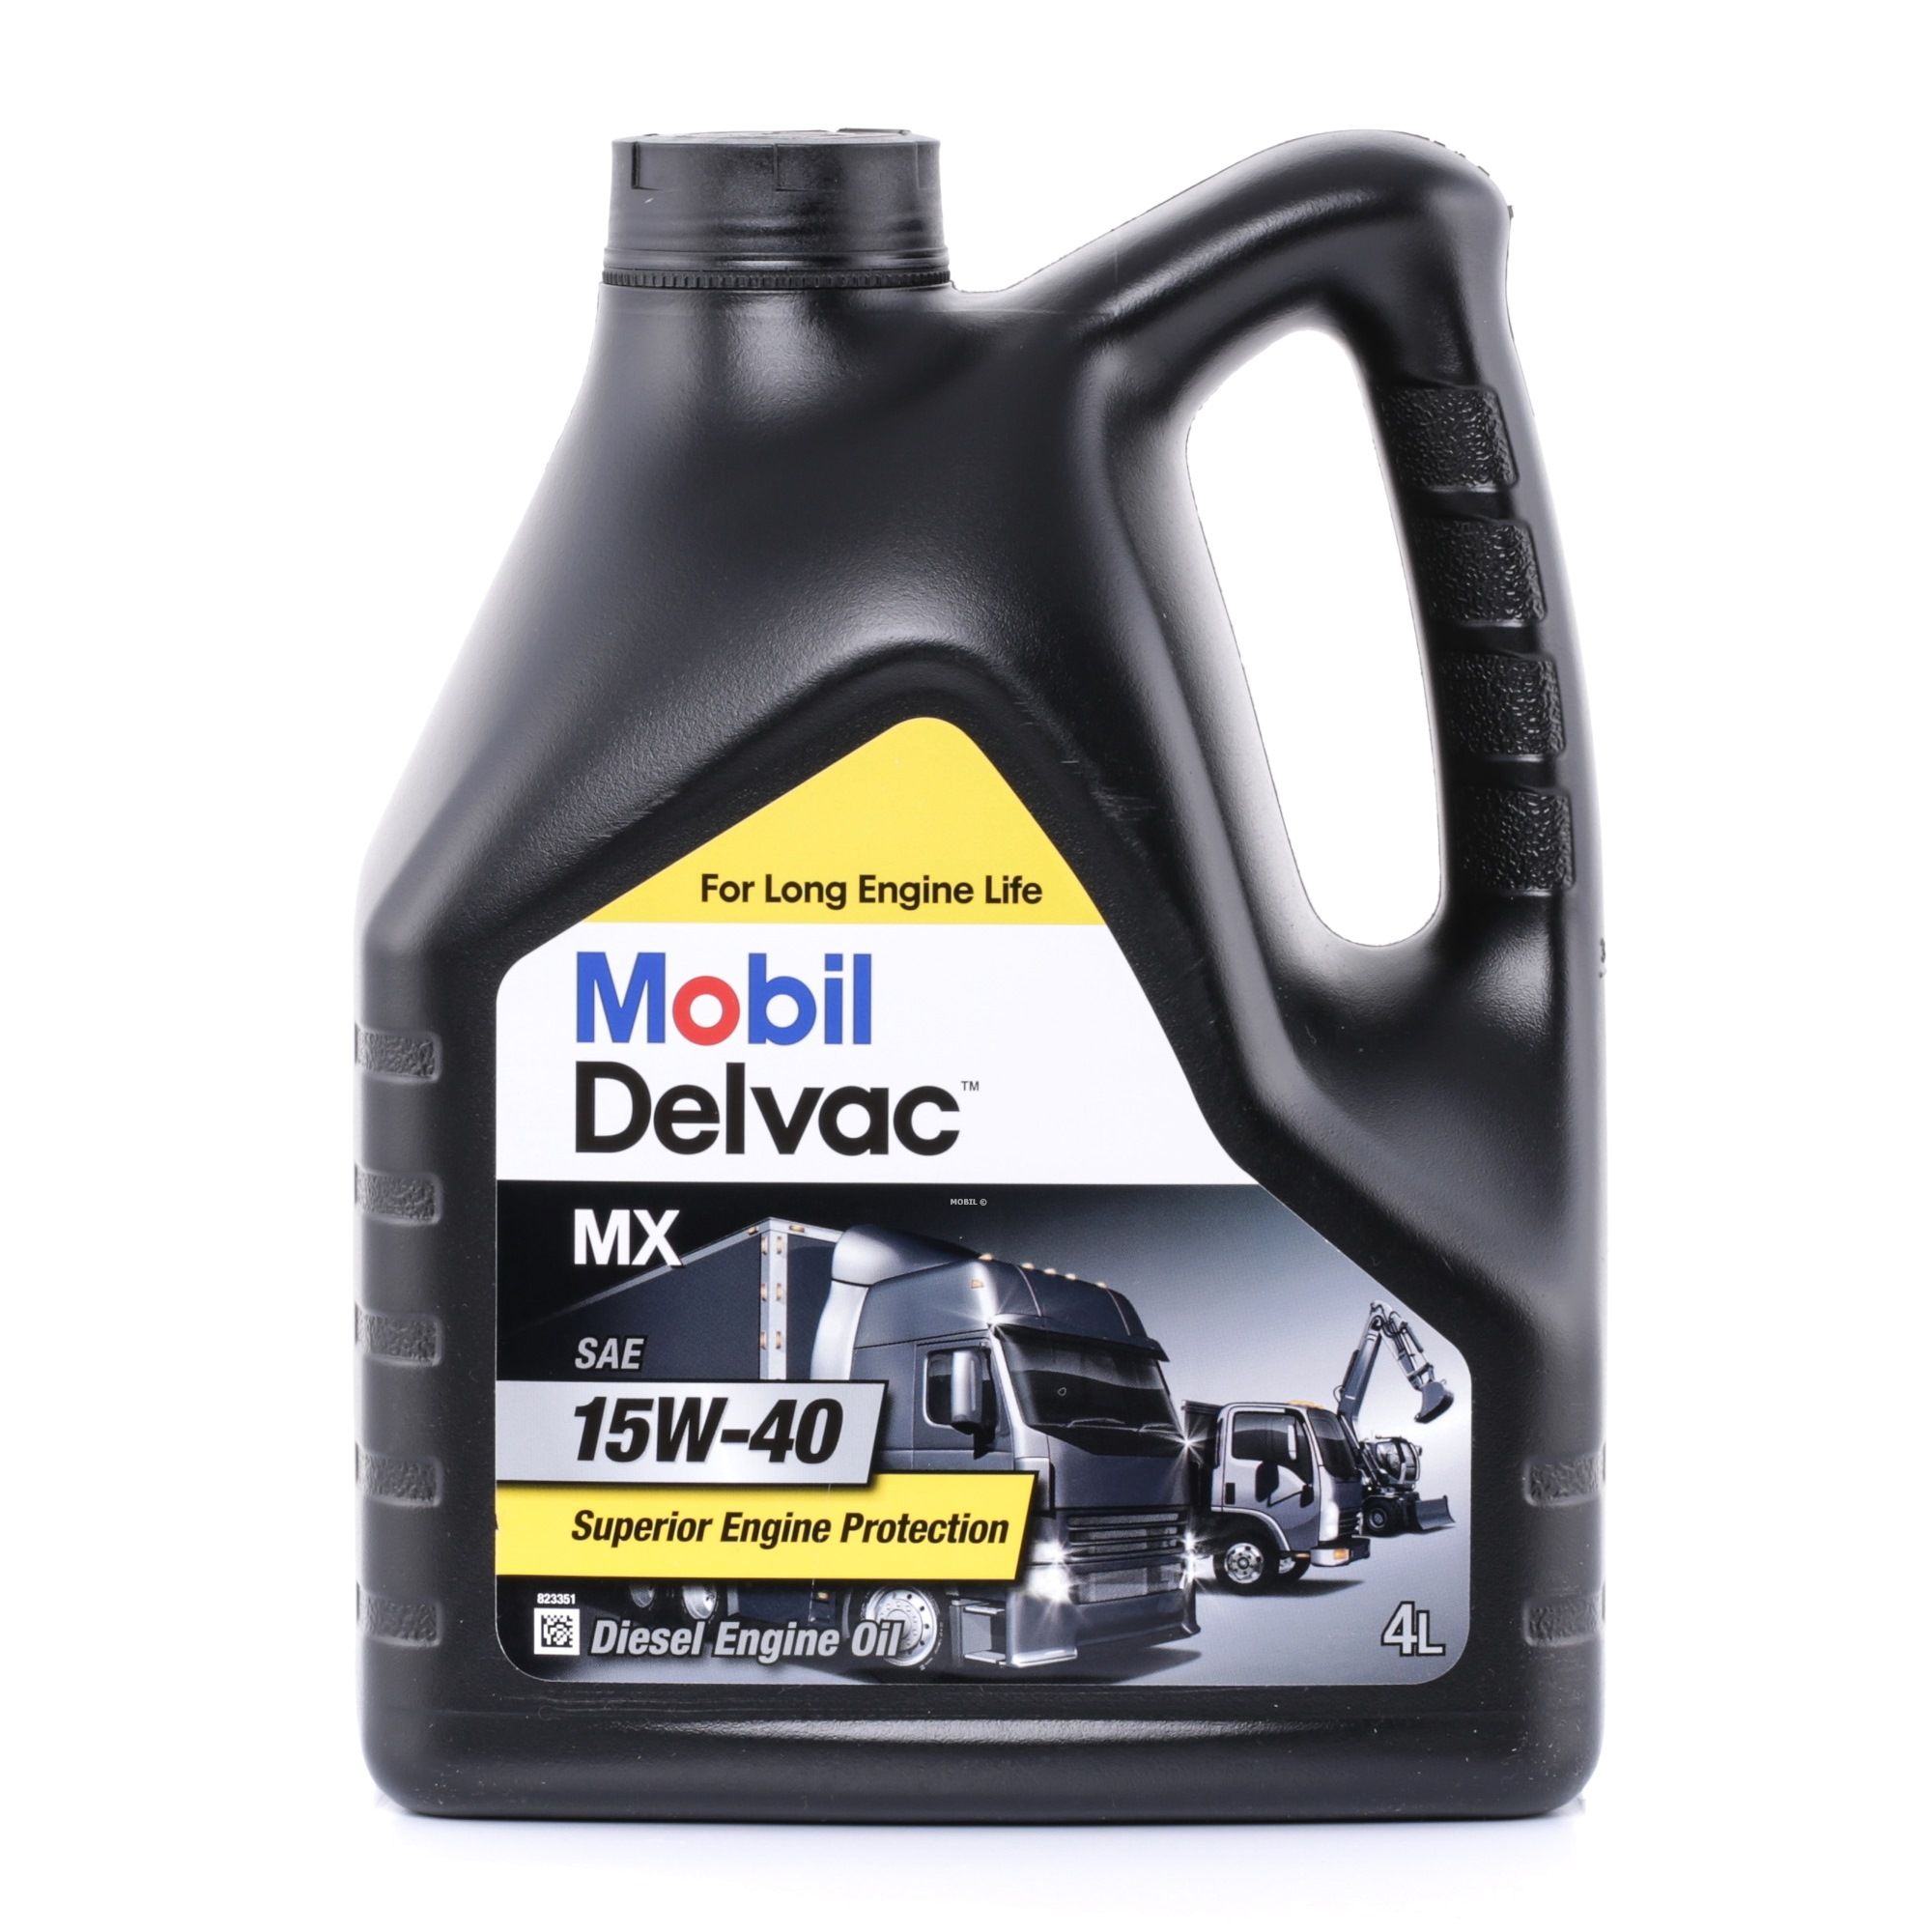 Kaufen Sie Motorenöl MOBIL 148370 Delvac, MX 15W-40, 4l